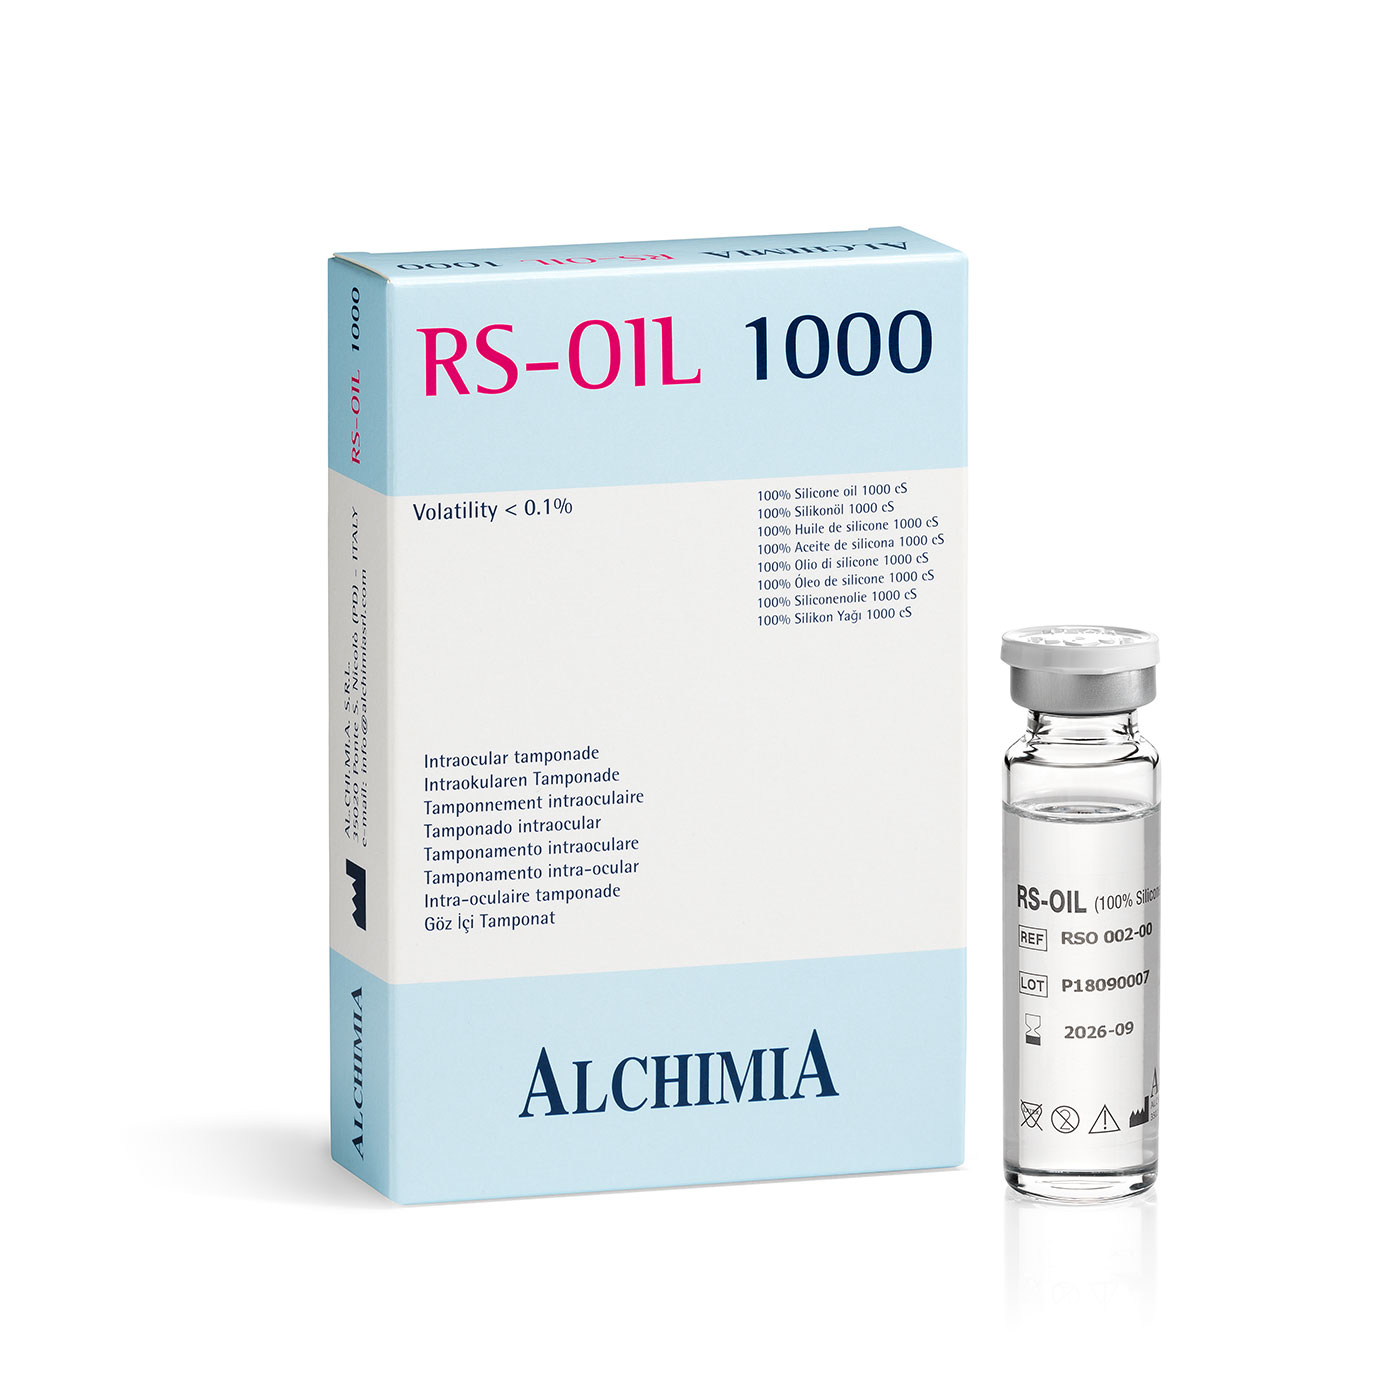 Aceites de silicona - Alchimia srl